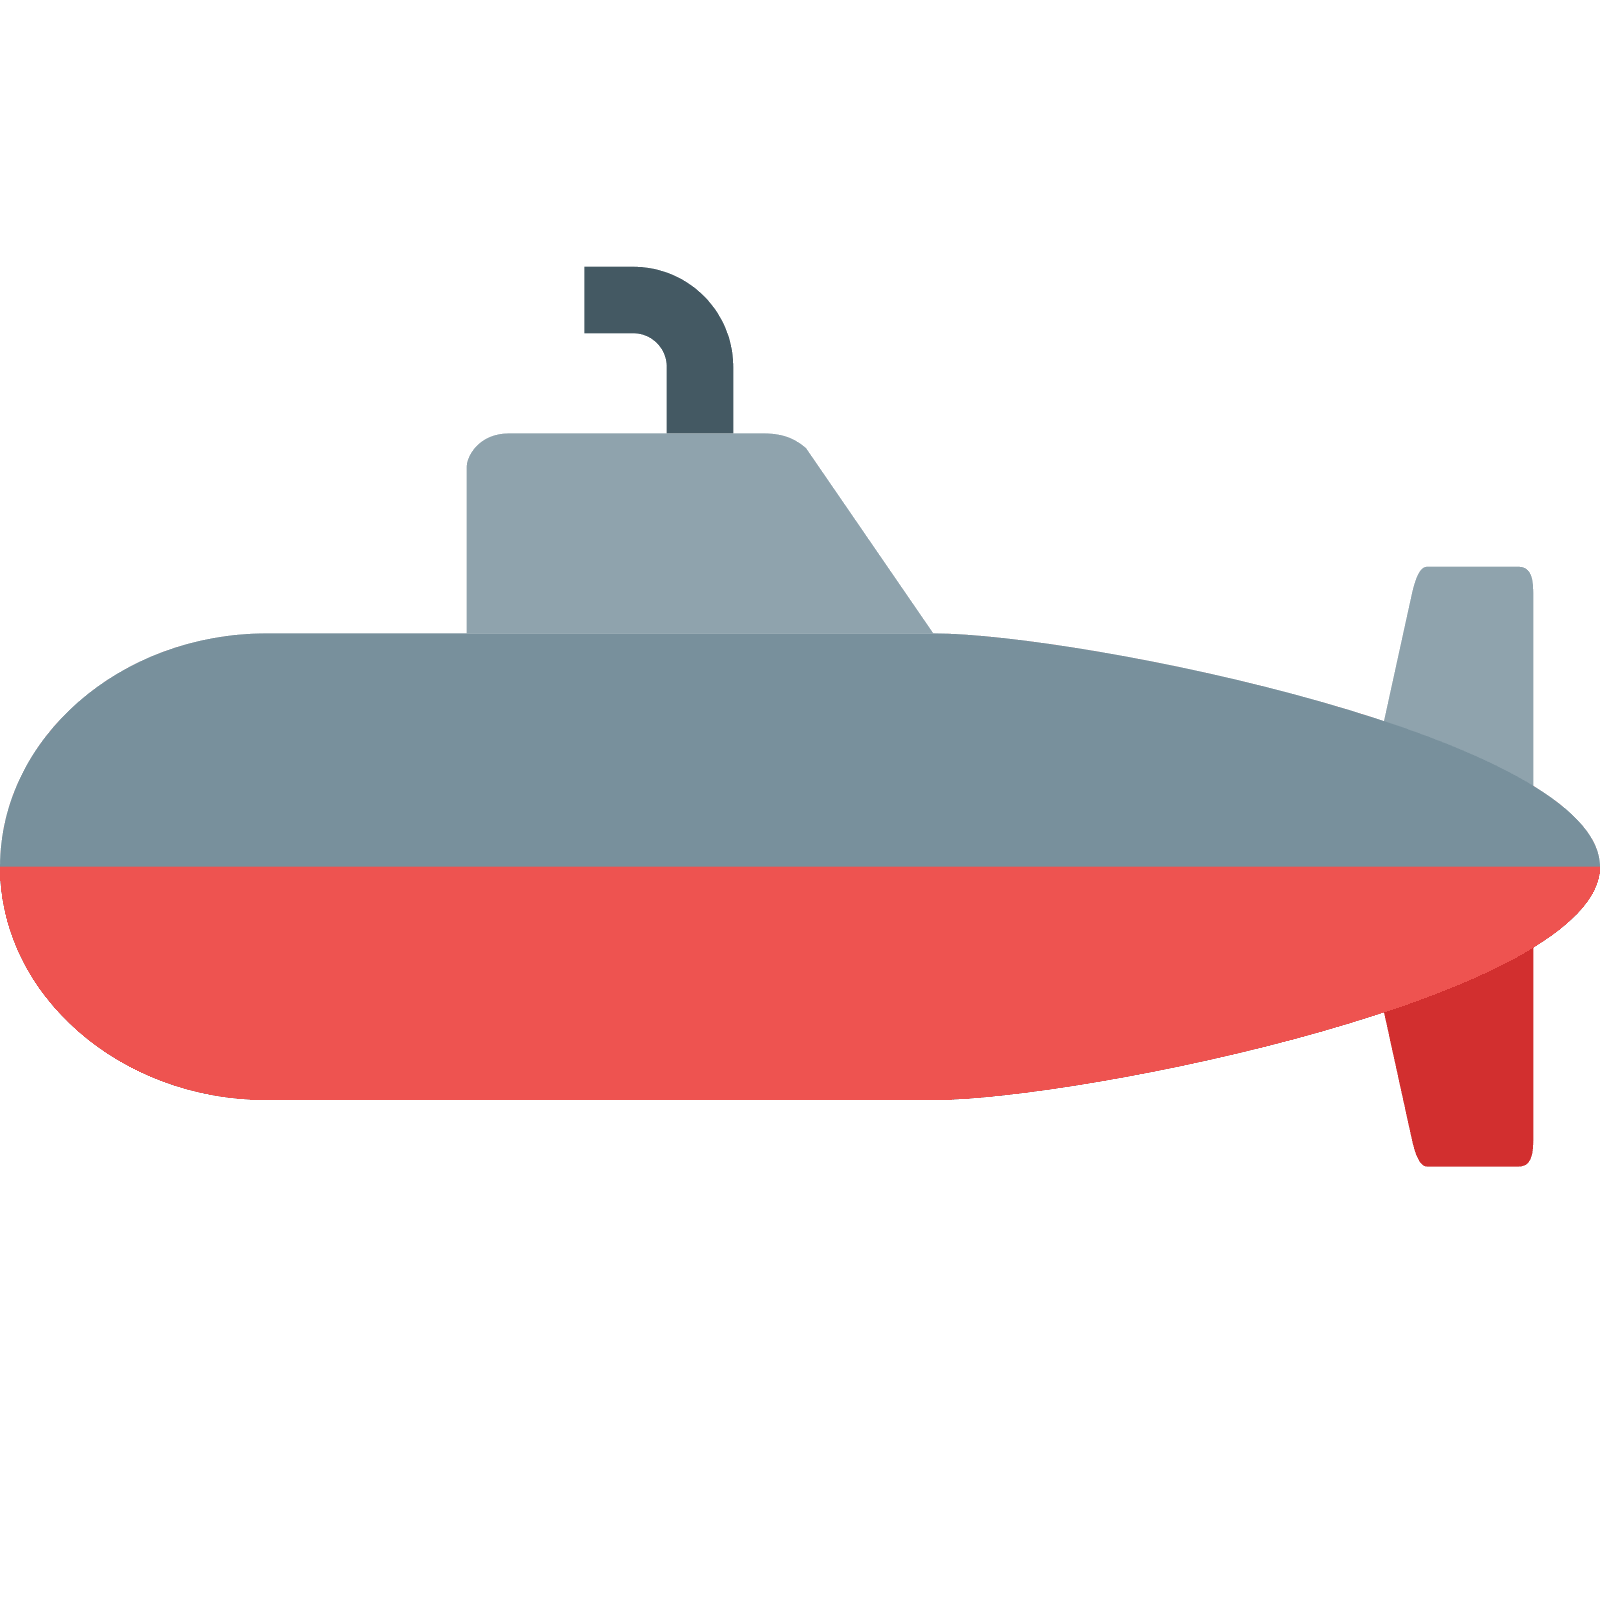 Submarine PNG Image File